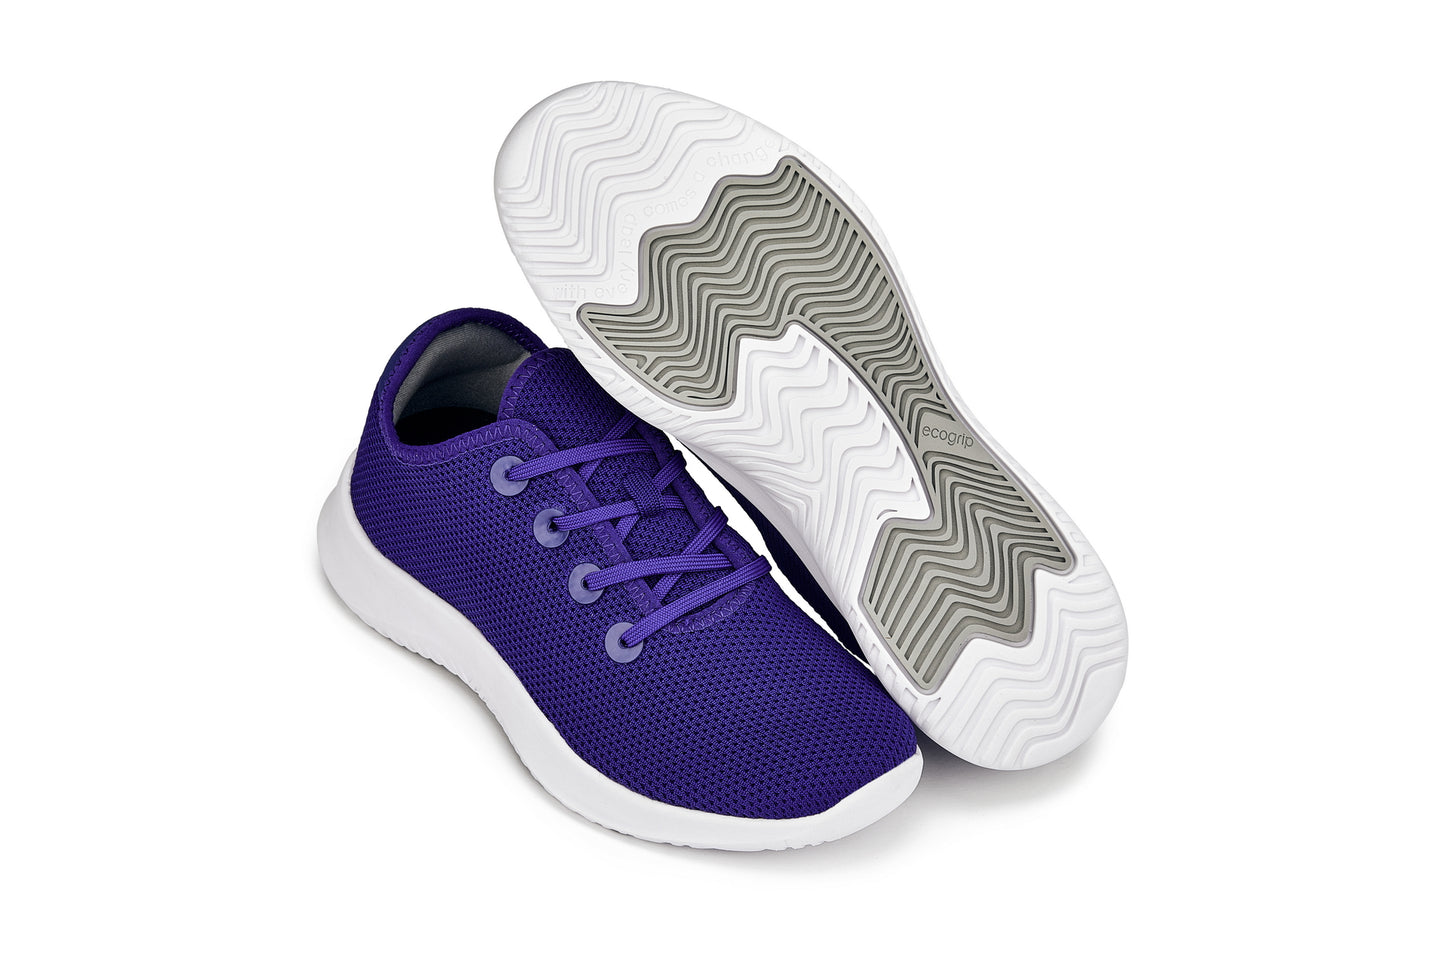 CALTO - Q404 - 2.4 Inches Taller (Cobalt) - Ultra Lightweight Knitted Sneakers